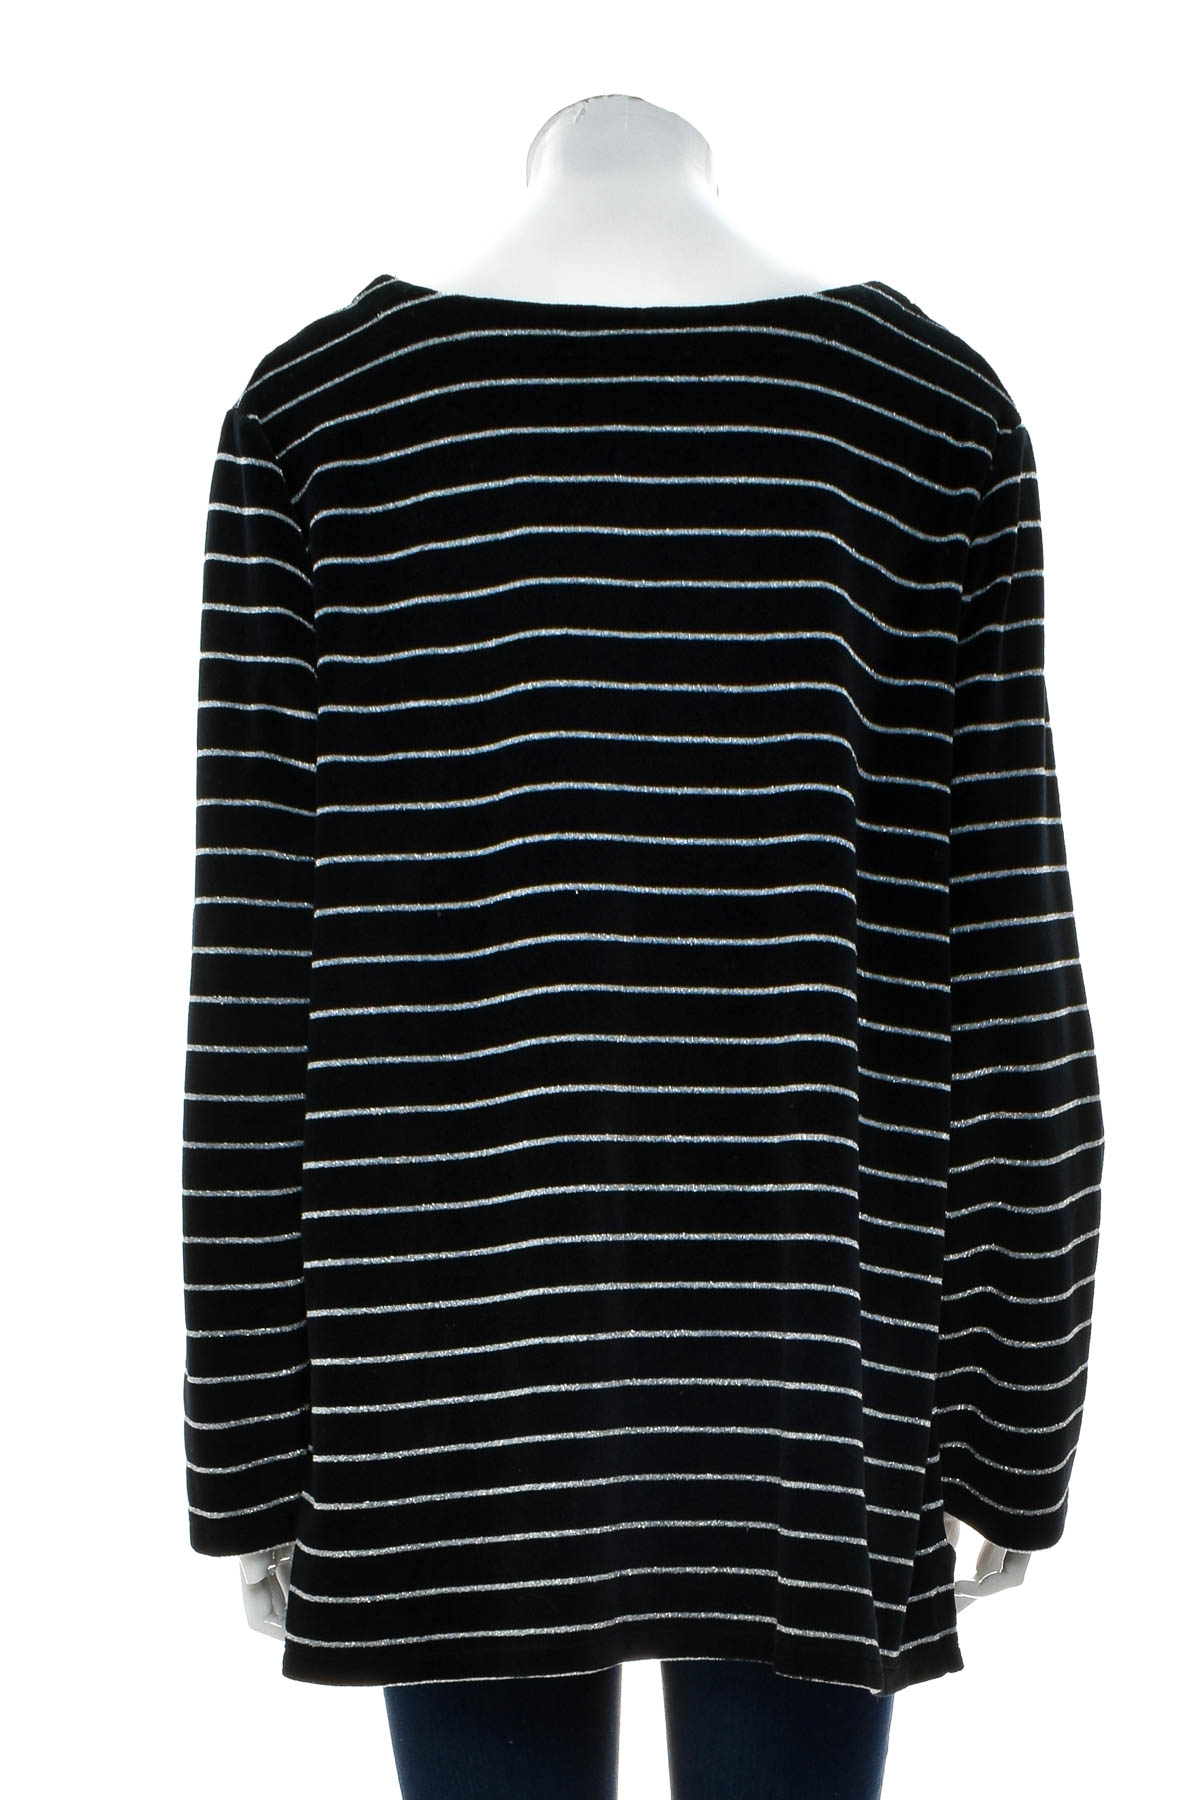 Women's sweater - Liz Claiborne - 1